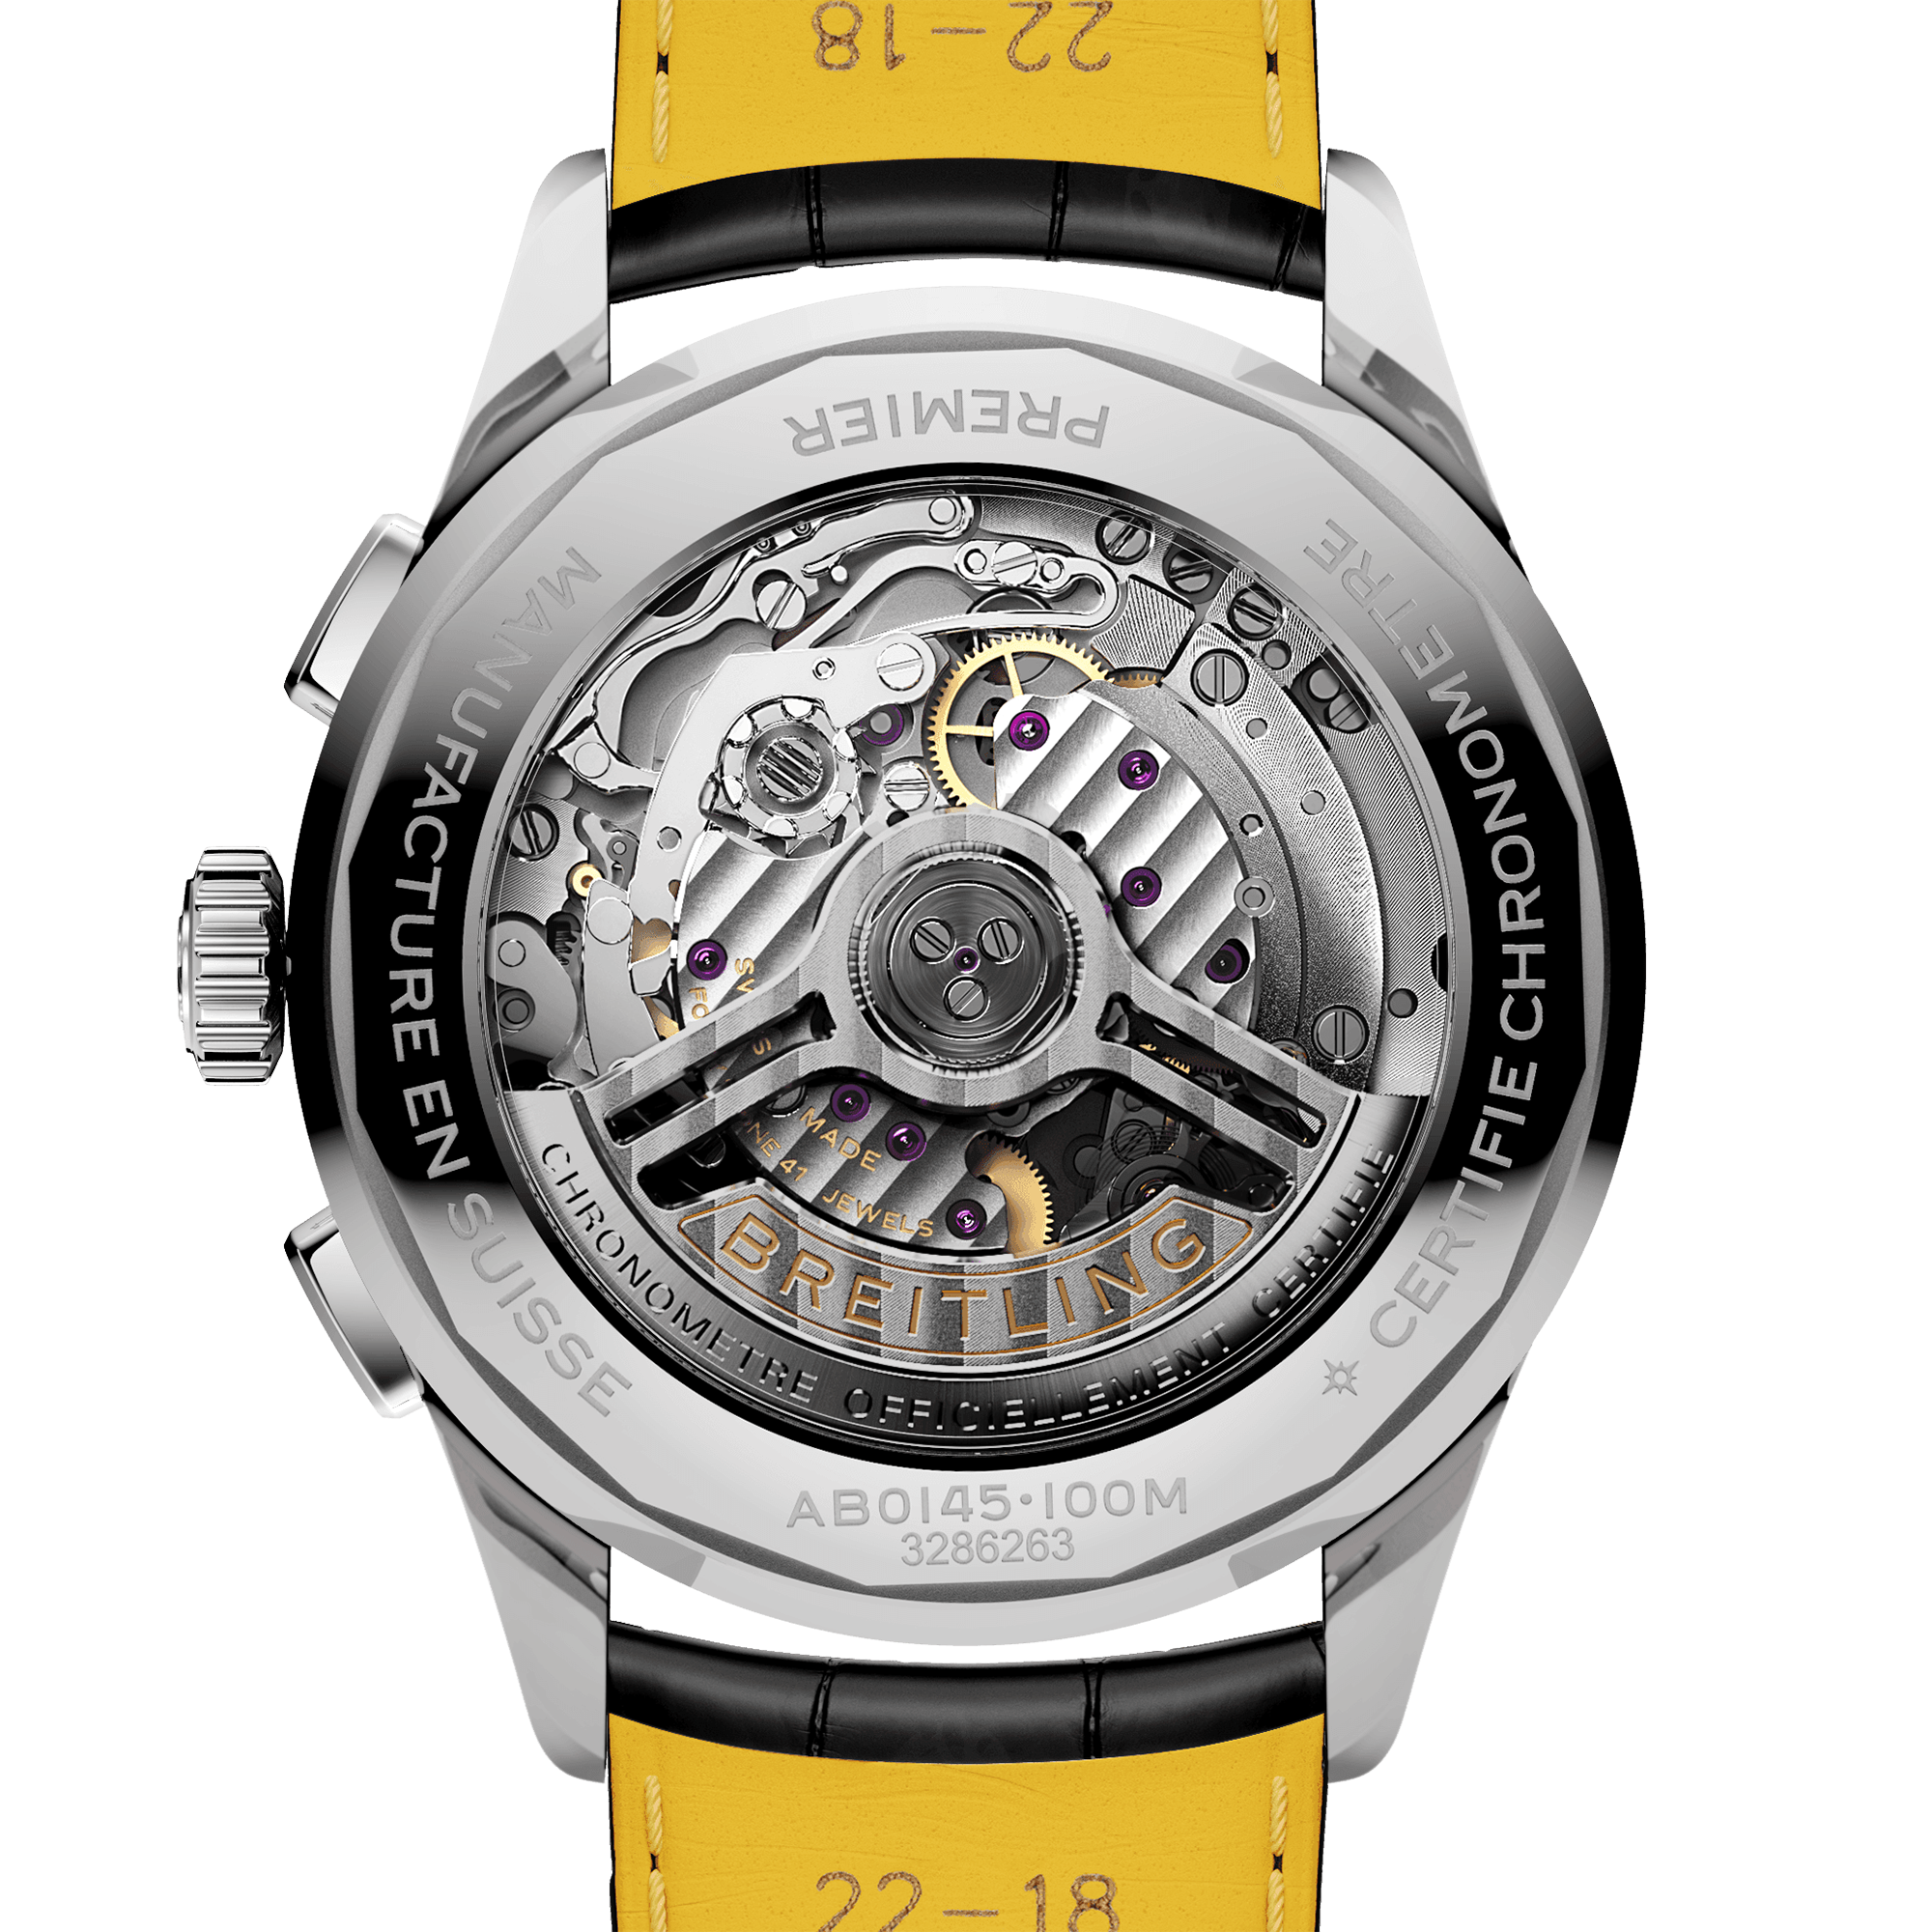 Premier B01 42mm Black Dial Automatic Chronograph Strap Watch